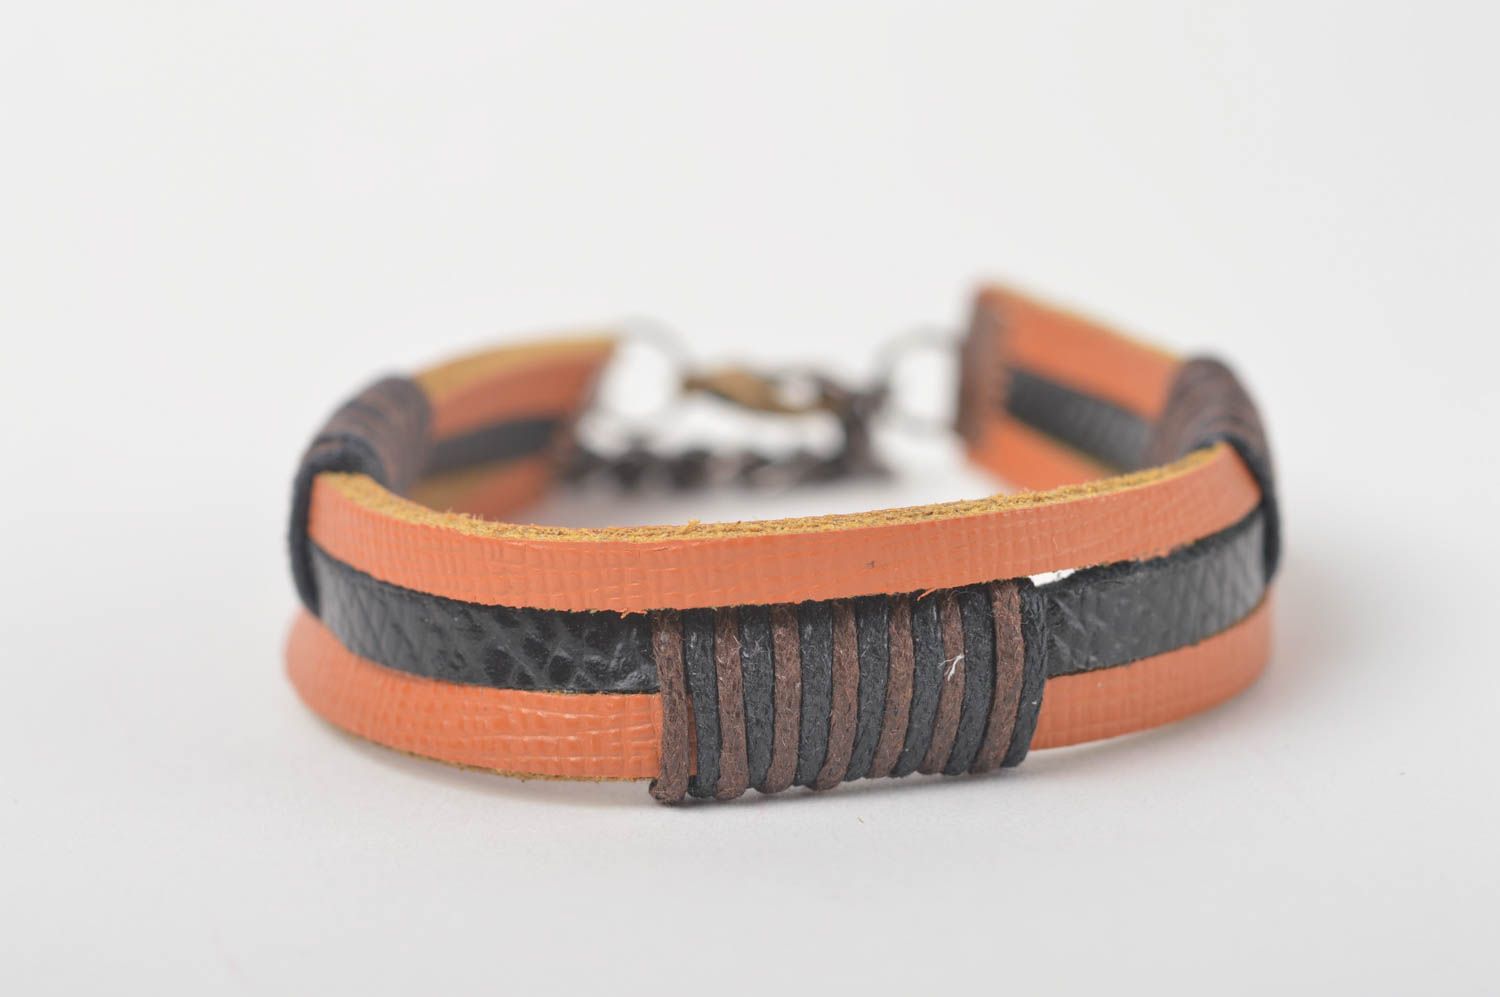 Handmade genuine leather bracelet wrist bracelet designs fashion trends photo 4